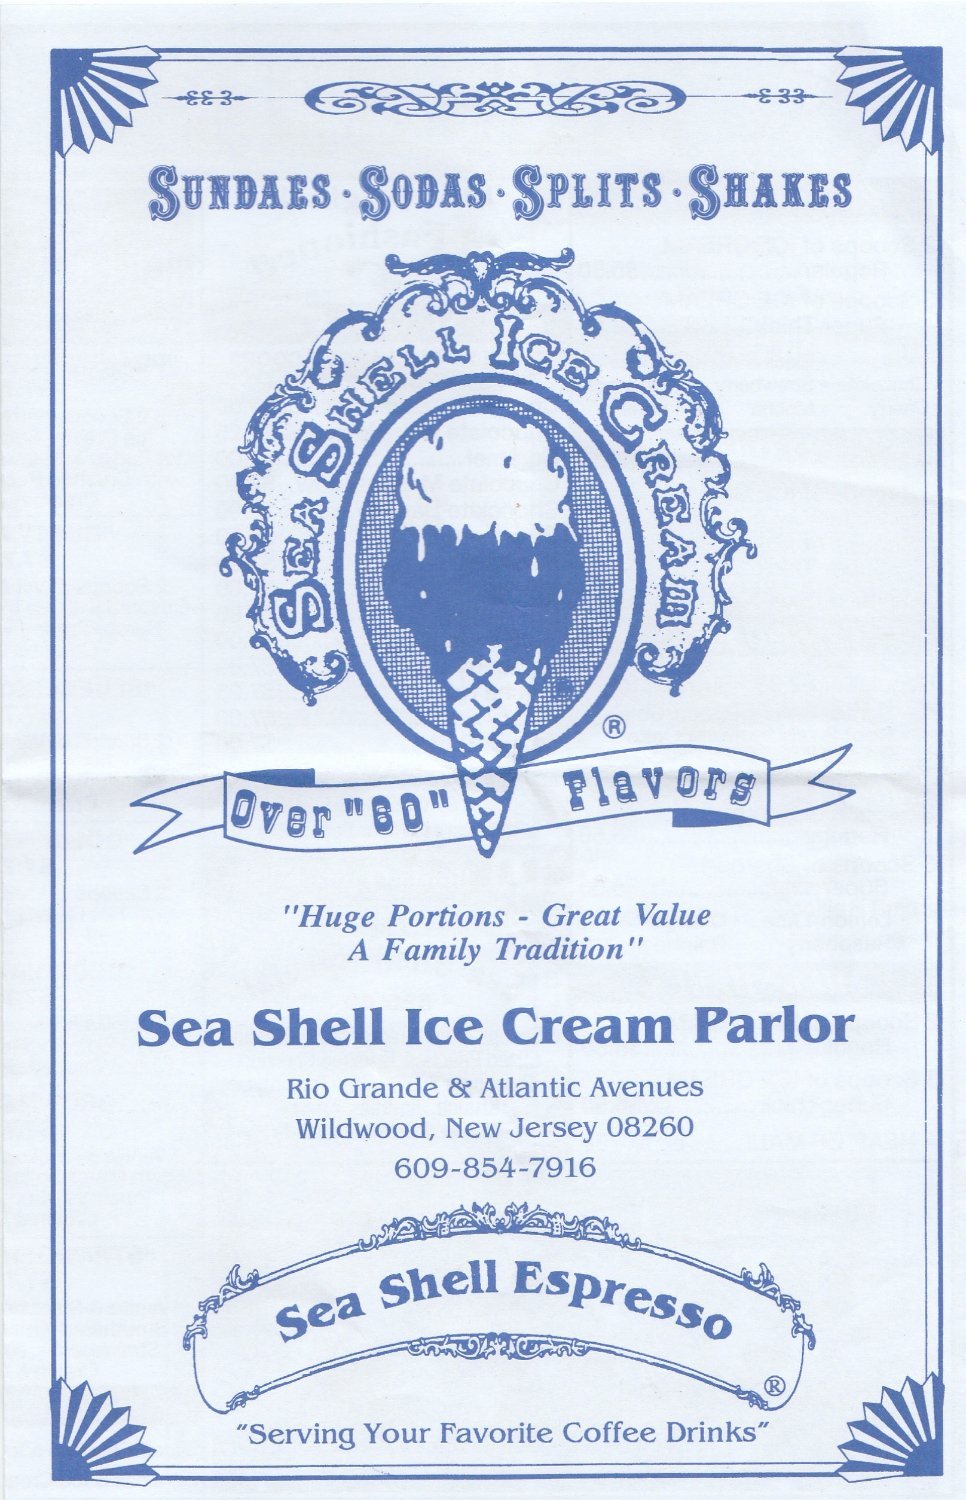 Sea Shell Ice Cream